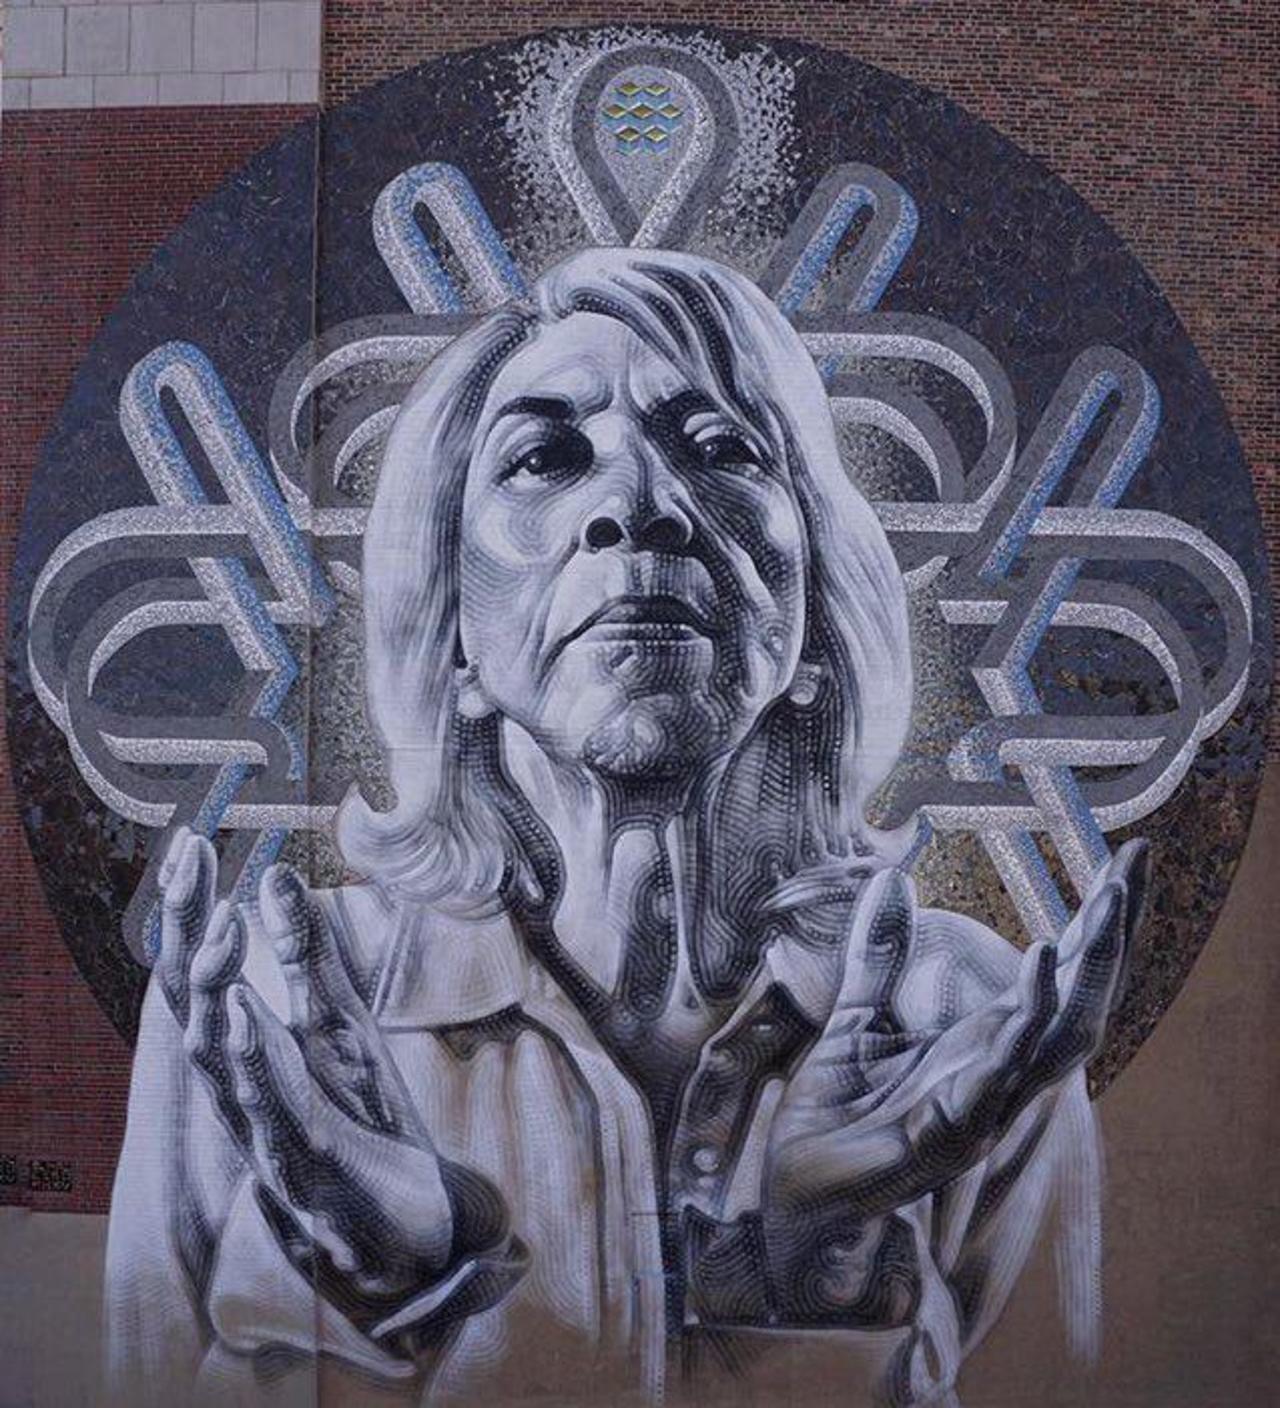 New Street Art by El Mac 

#art #graffiti #mural #streetart https://t.co/YMlMrH4MSV